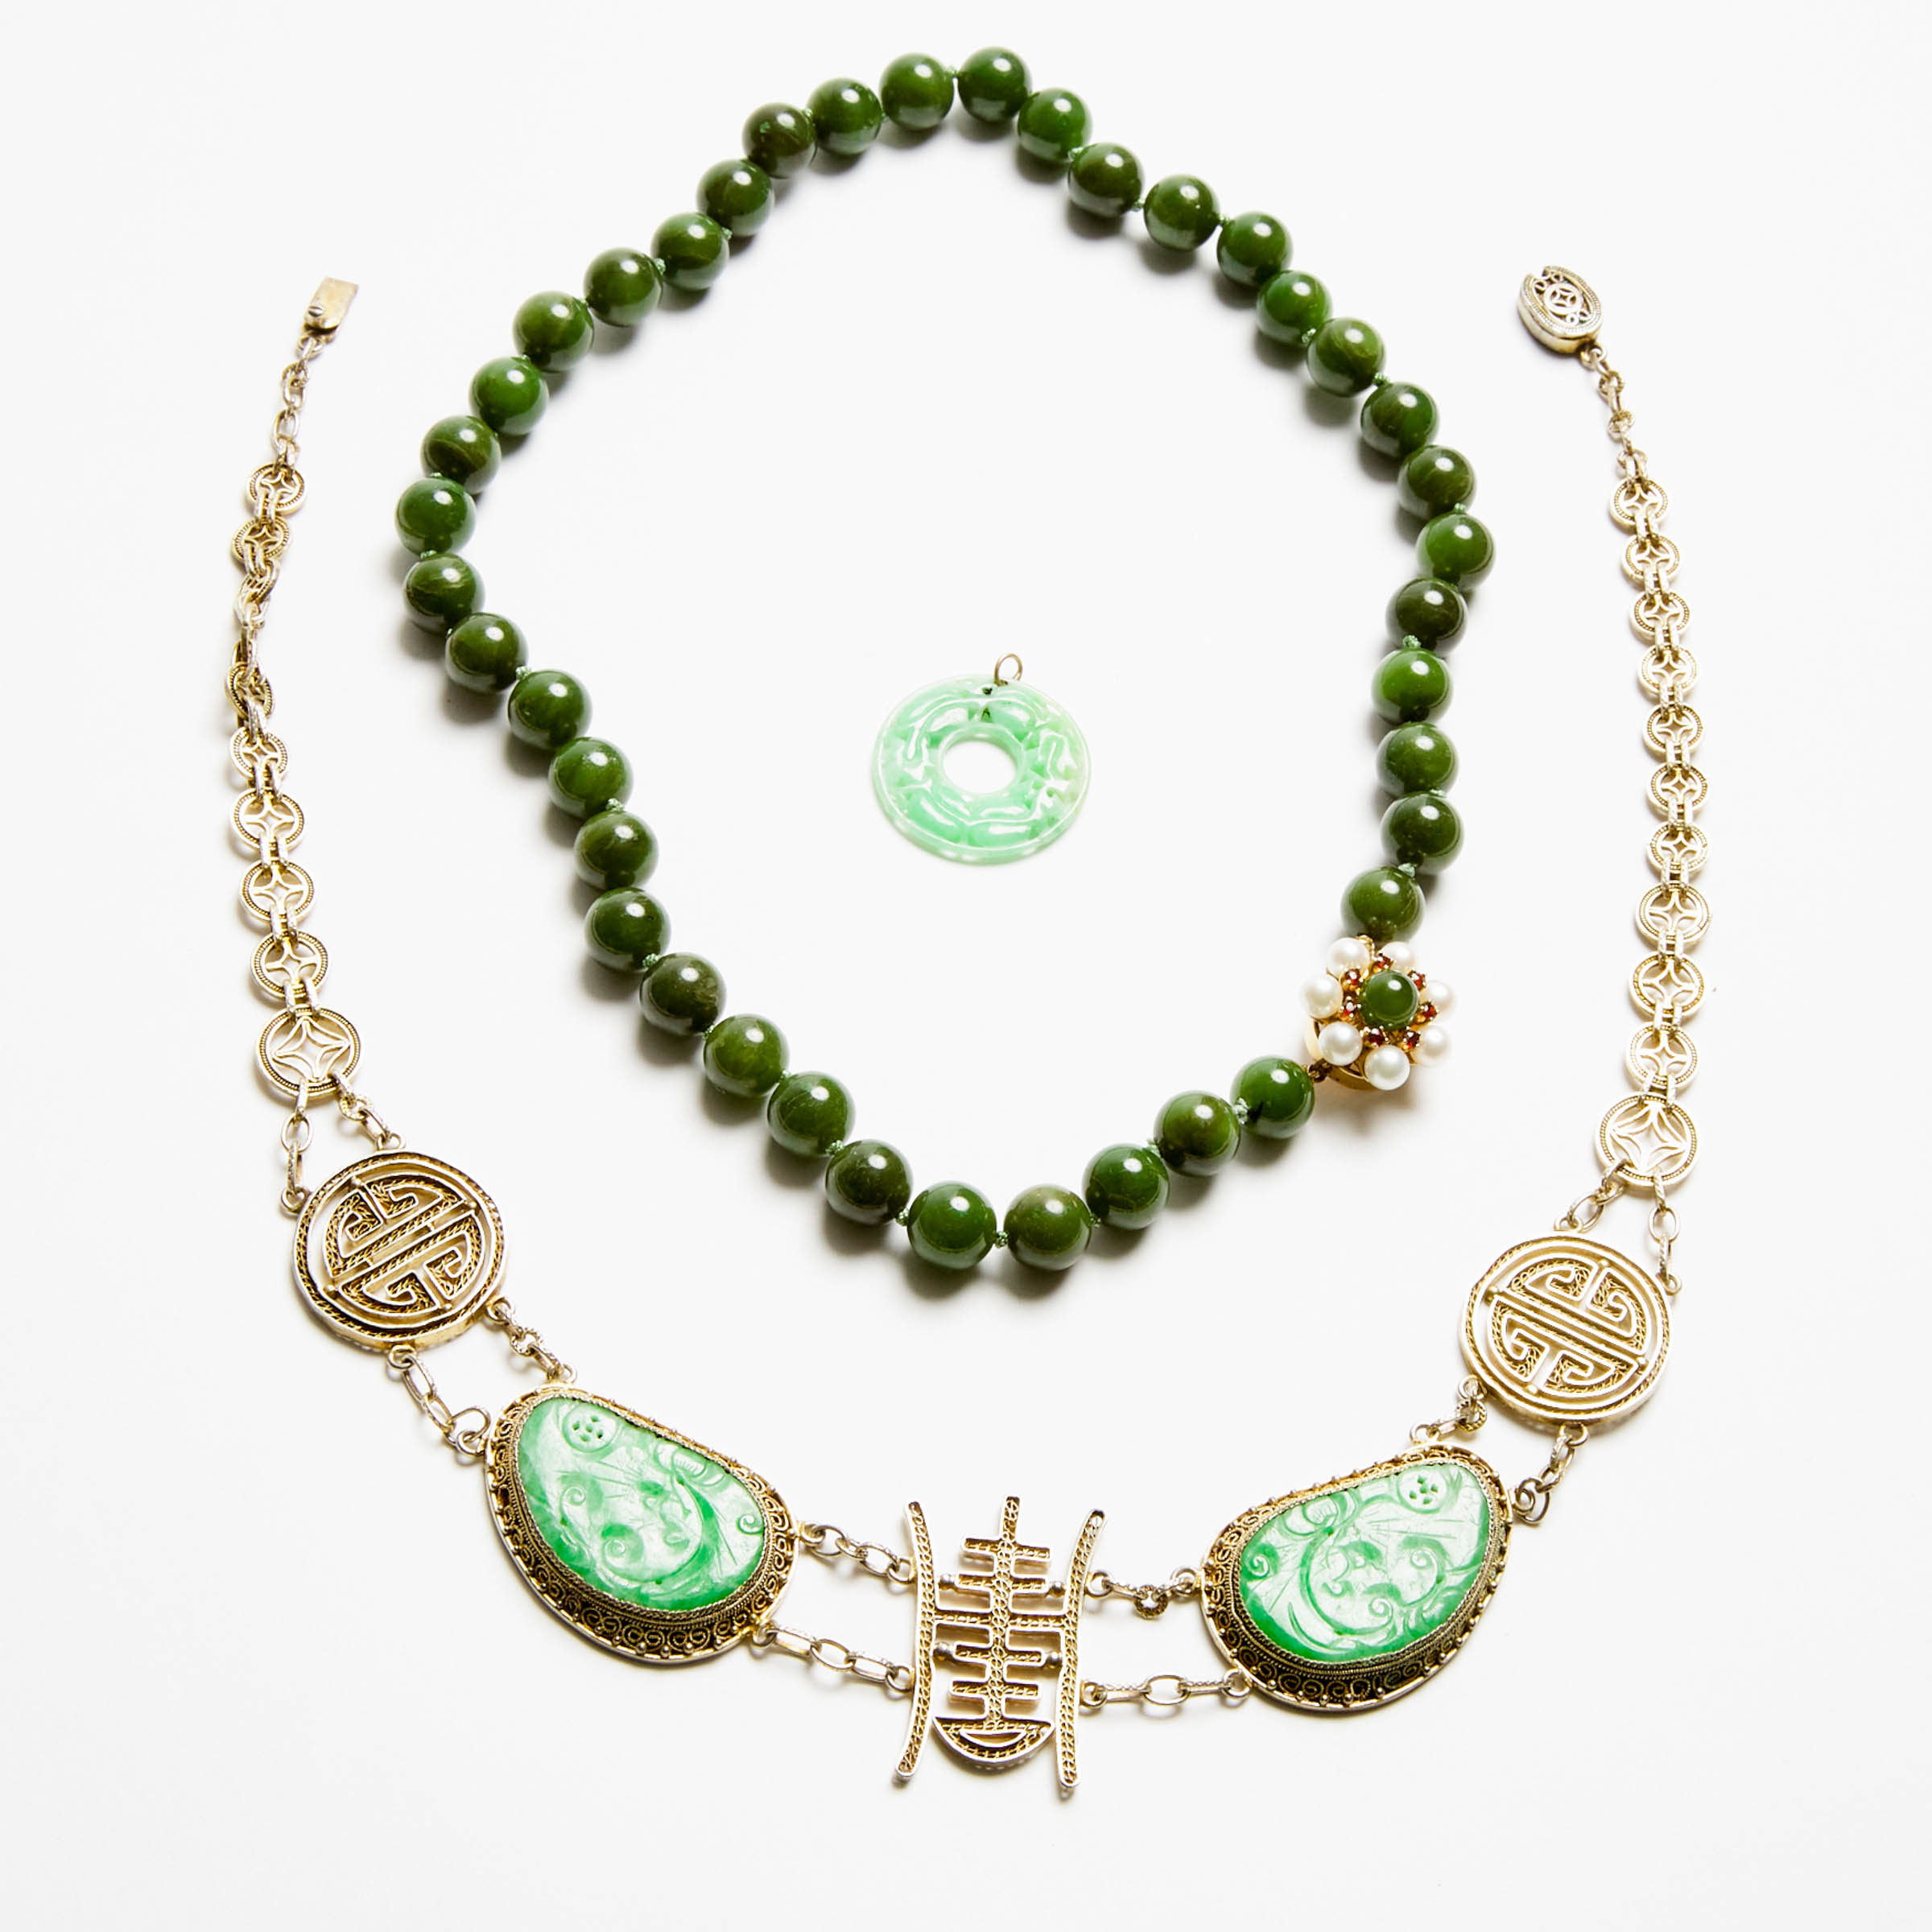 Three Jadeite and Spinach Jade Jewellery Pieces, 19th/20th Century